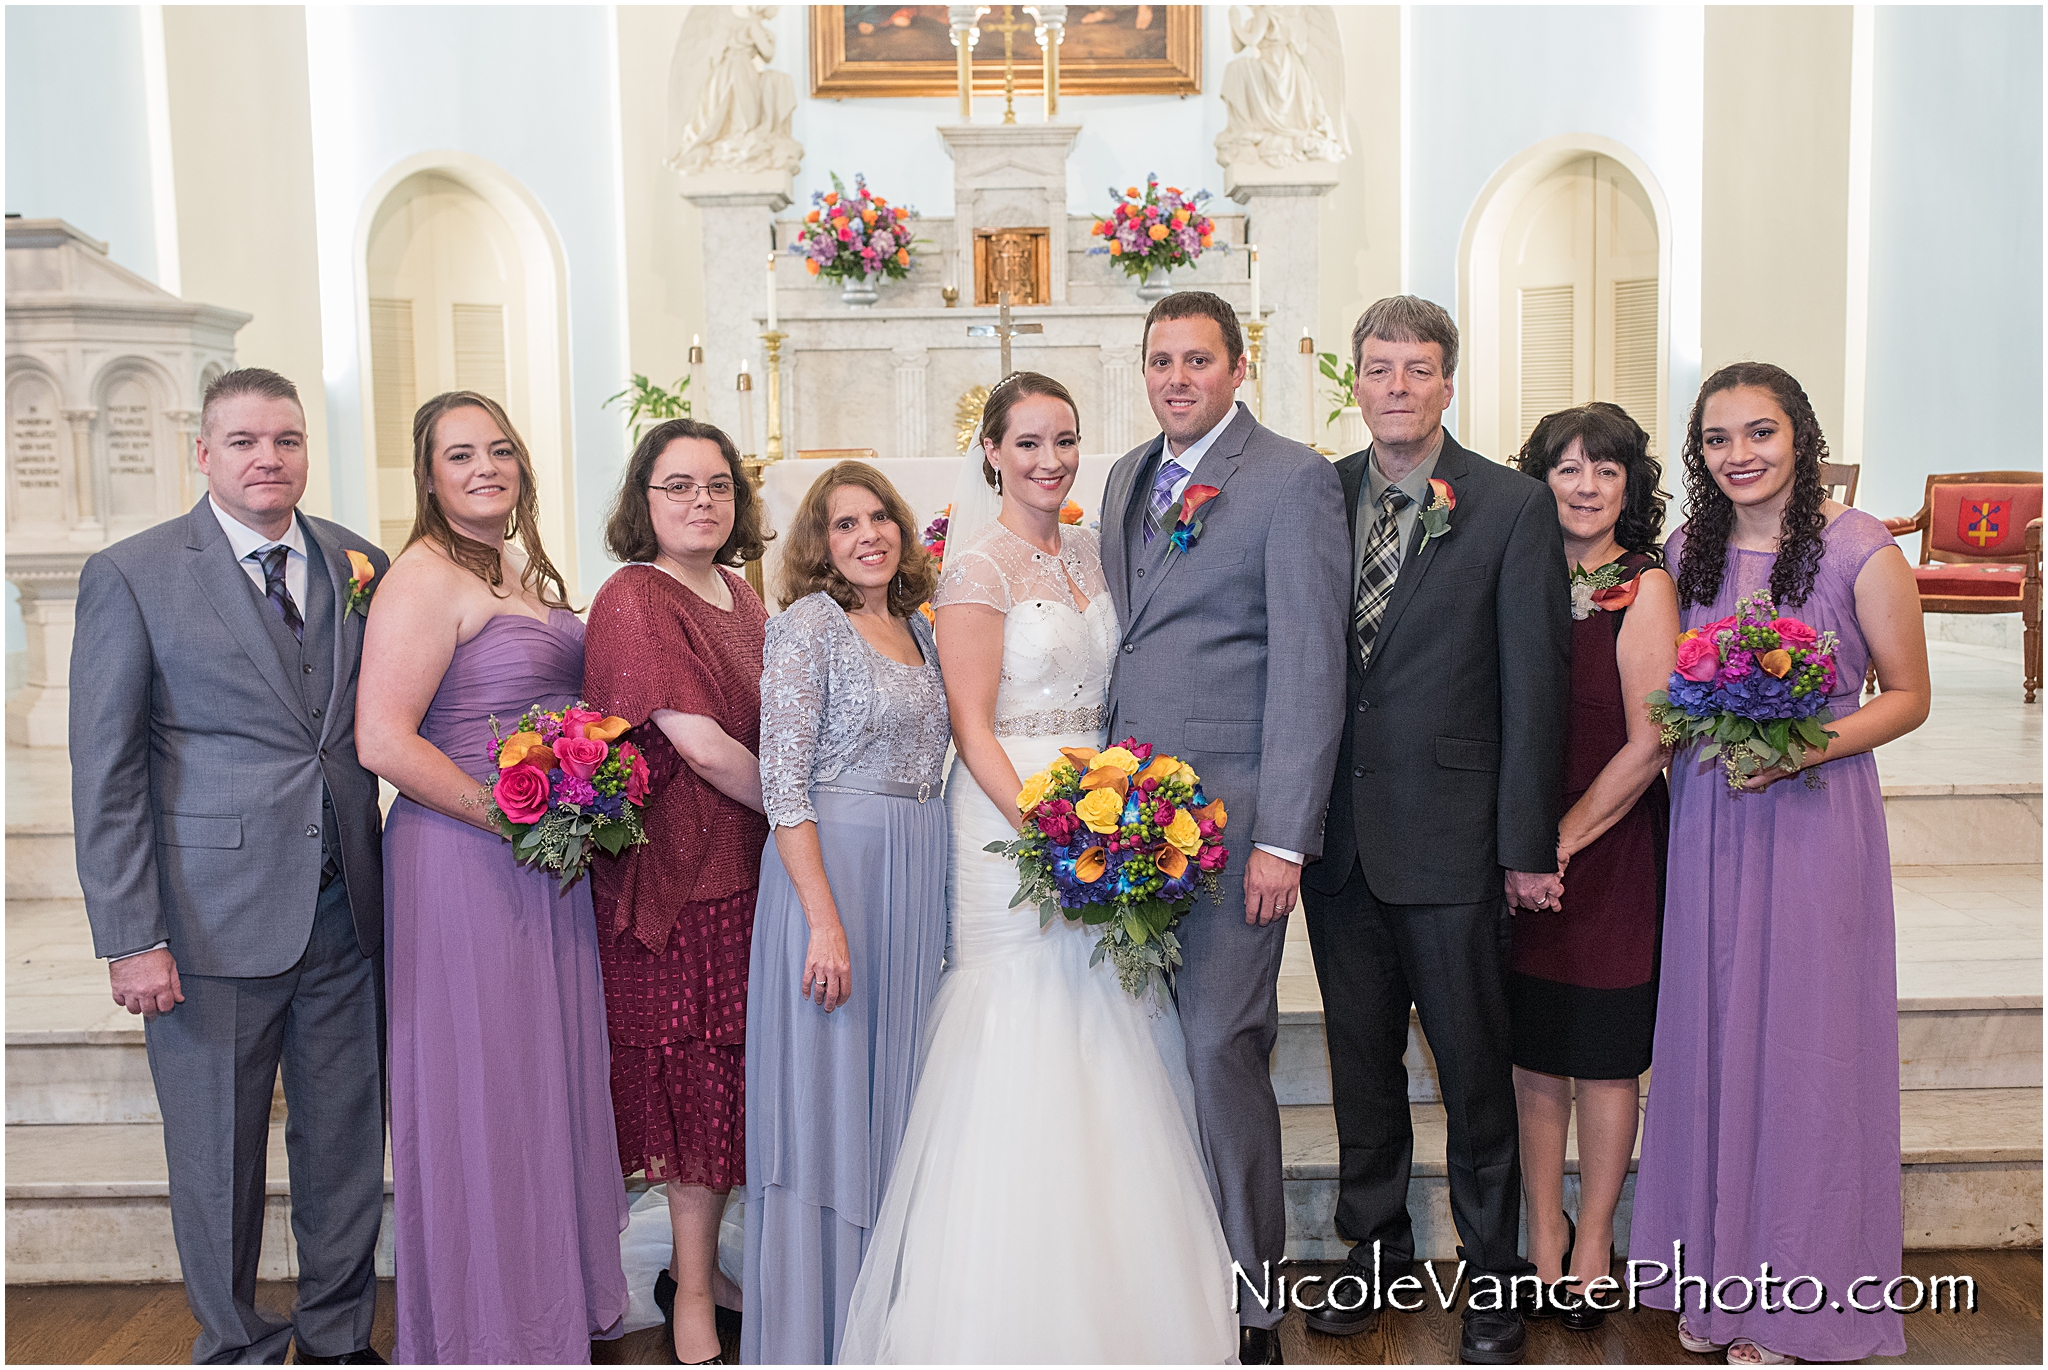 Family photos in St Peter's Church in Richmond Virginia.